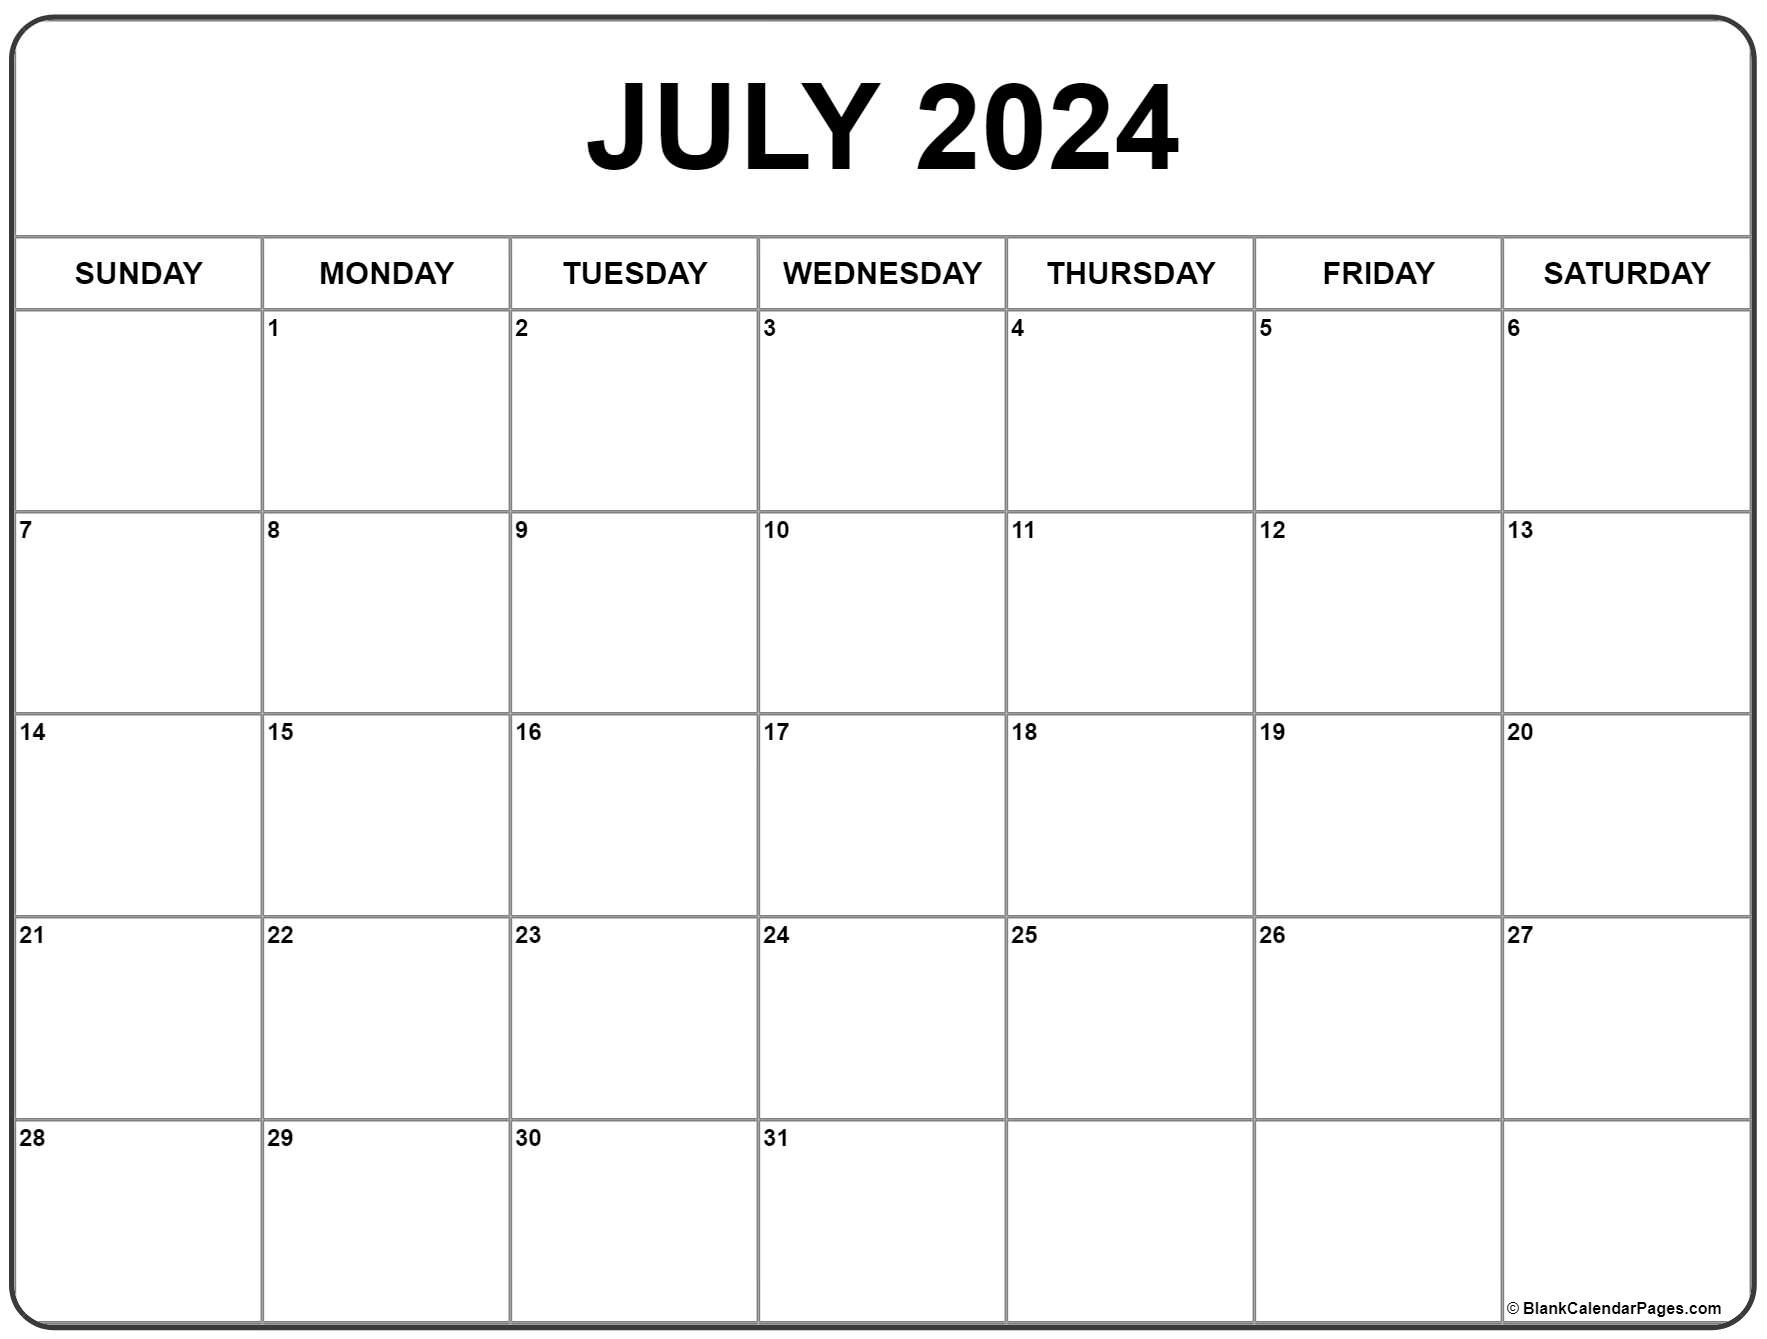 July 2024 Calendar | Free Printable Calendar for Free Printable Calendar July 2024 June 2024